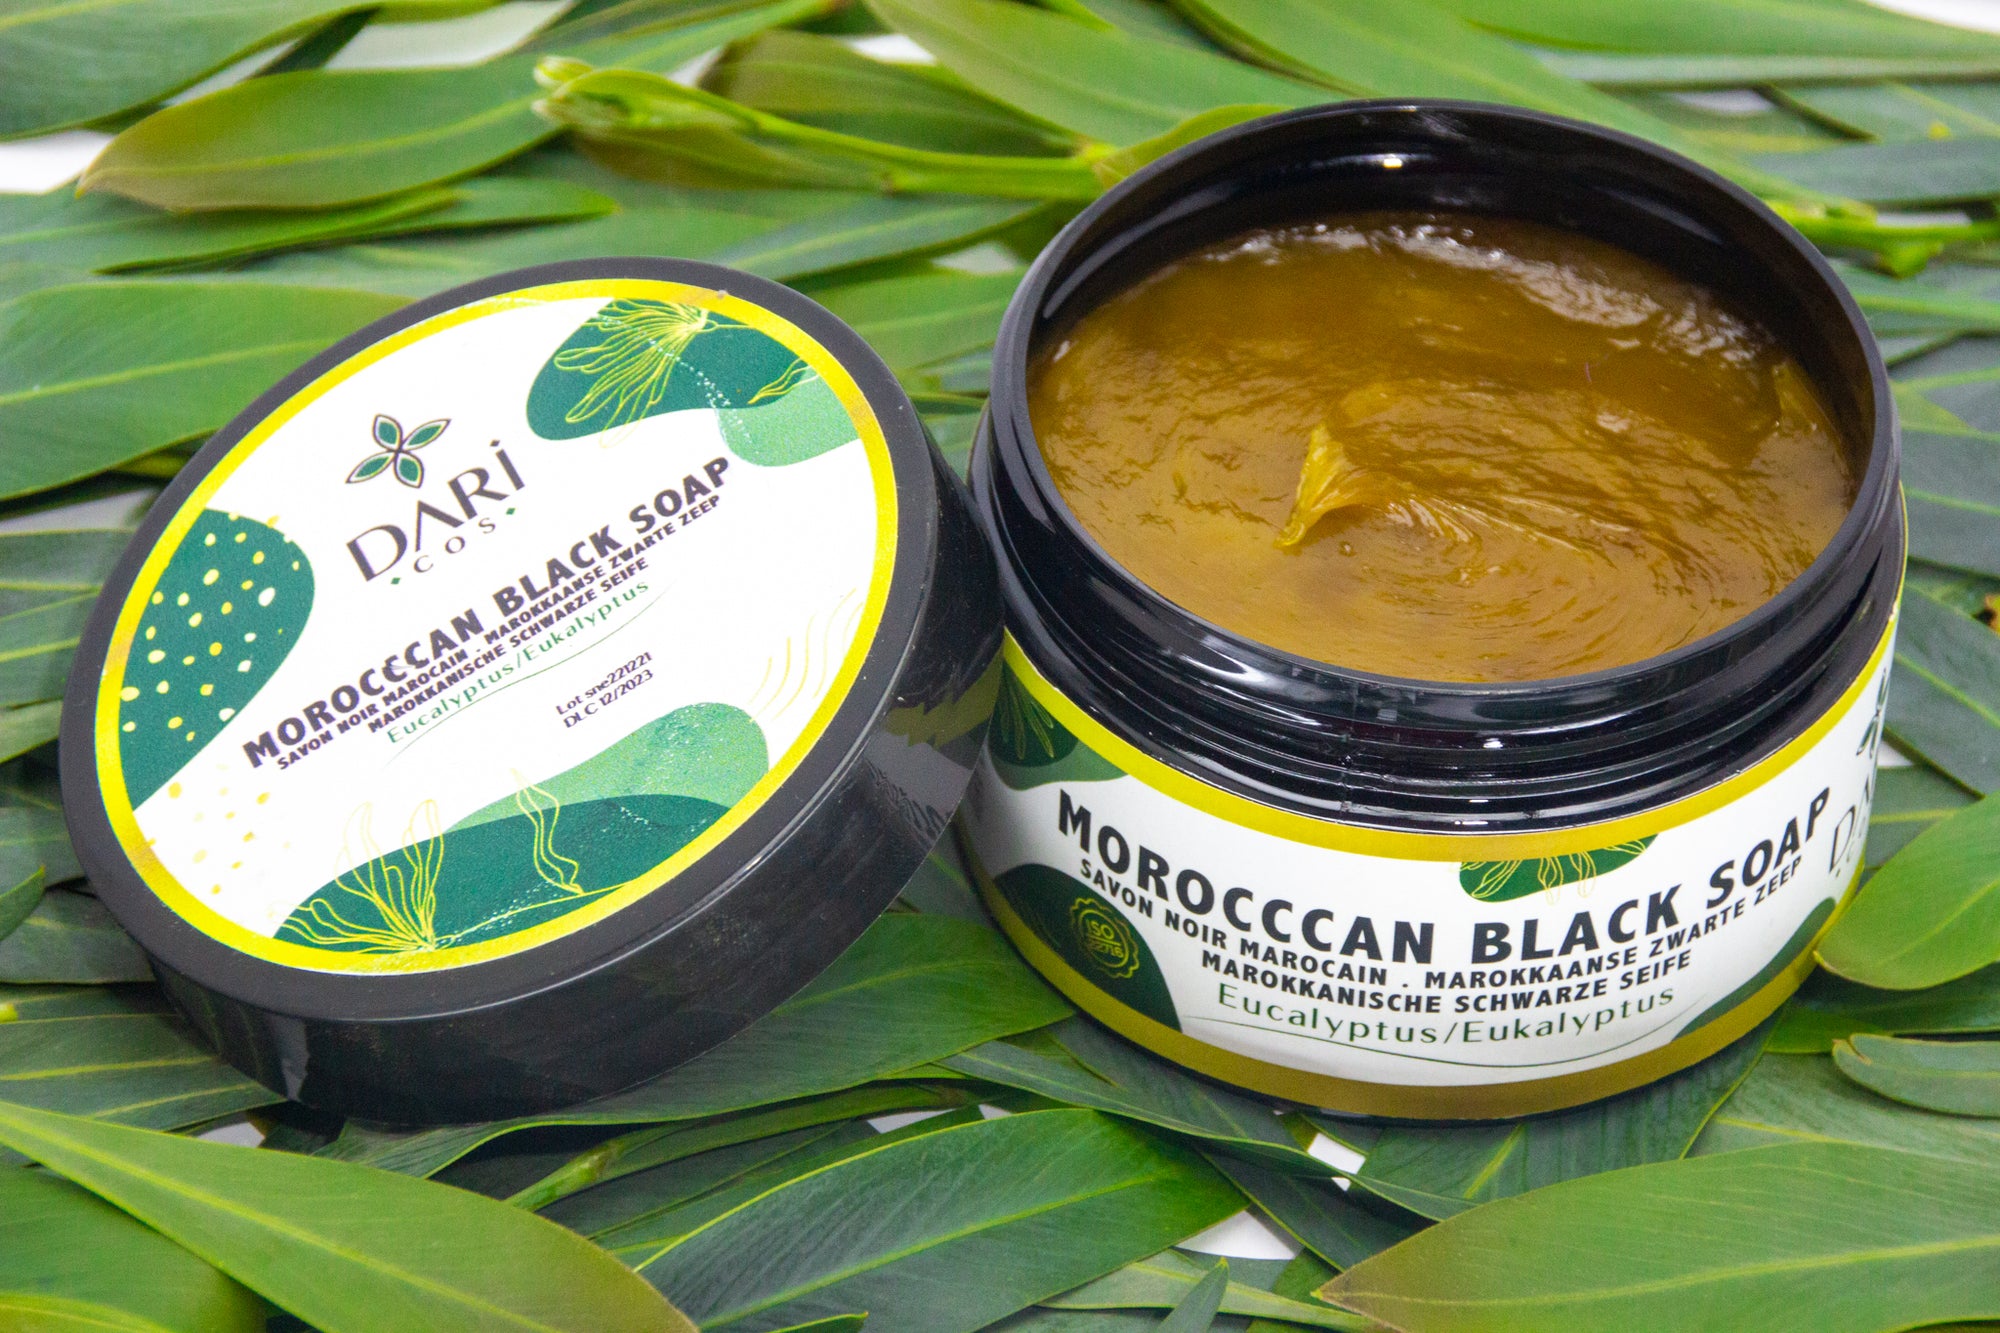 Moroccan Black Soap with Eucalyptus